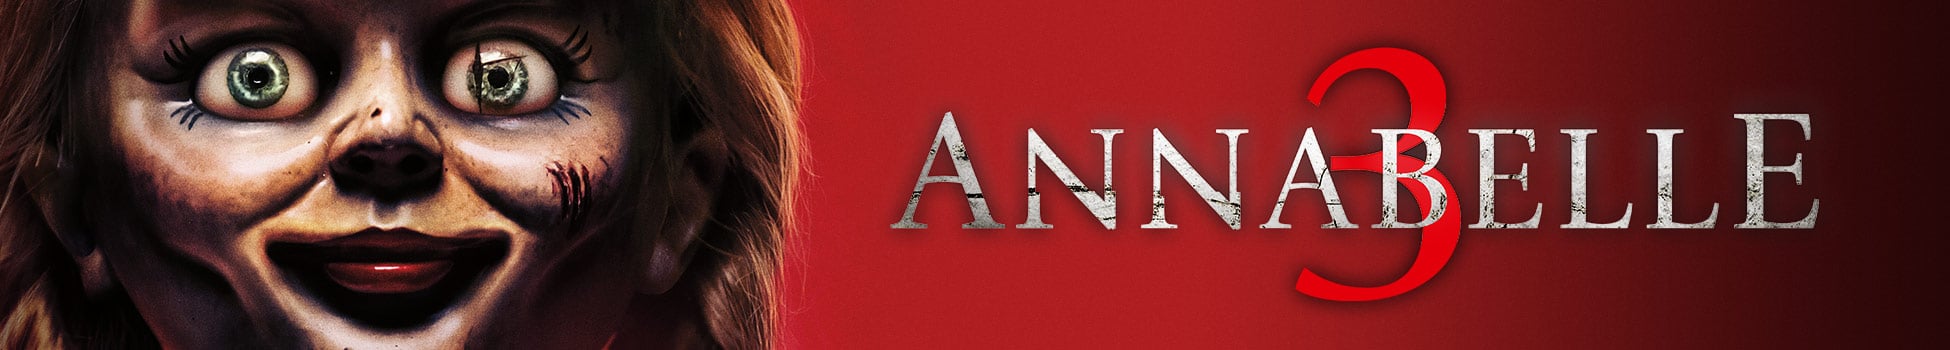 Annabelle 3 - Artwork - Key Visual - Header